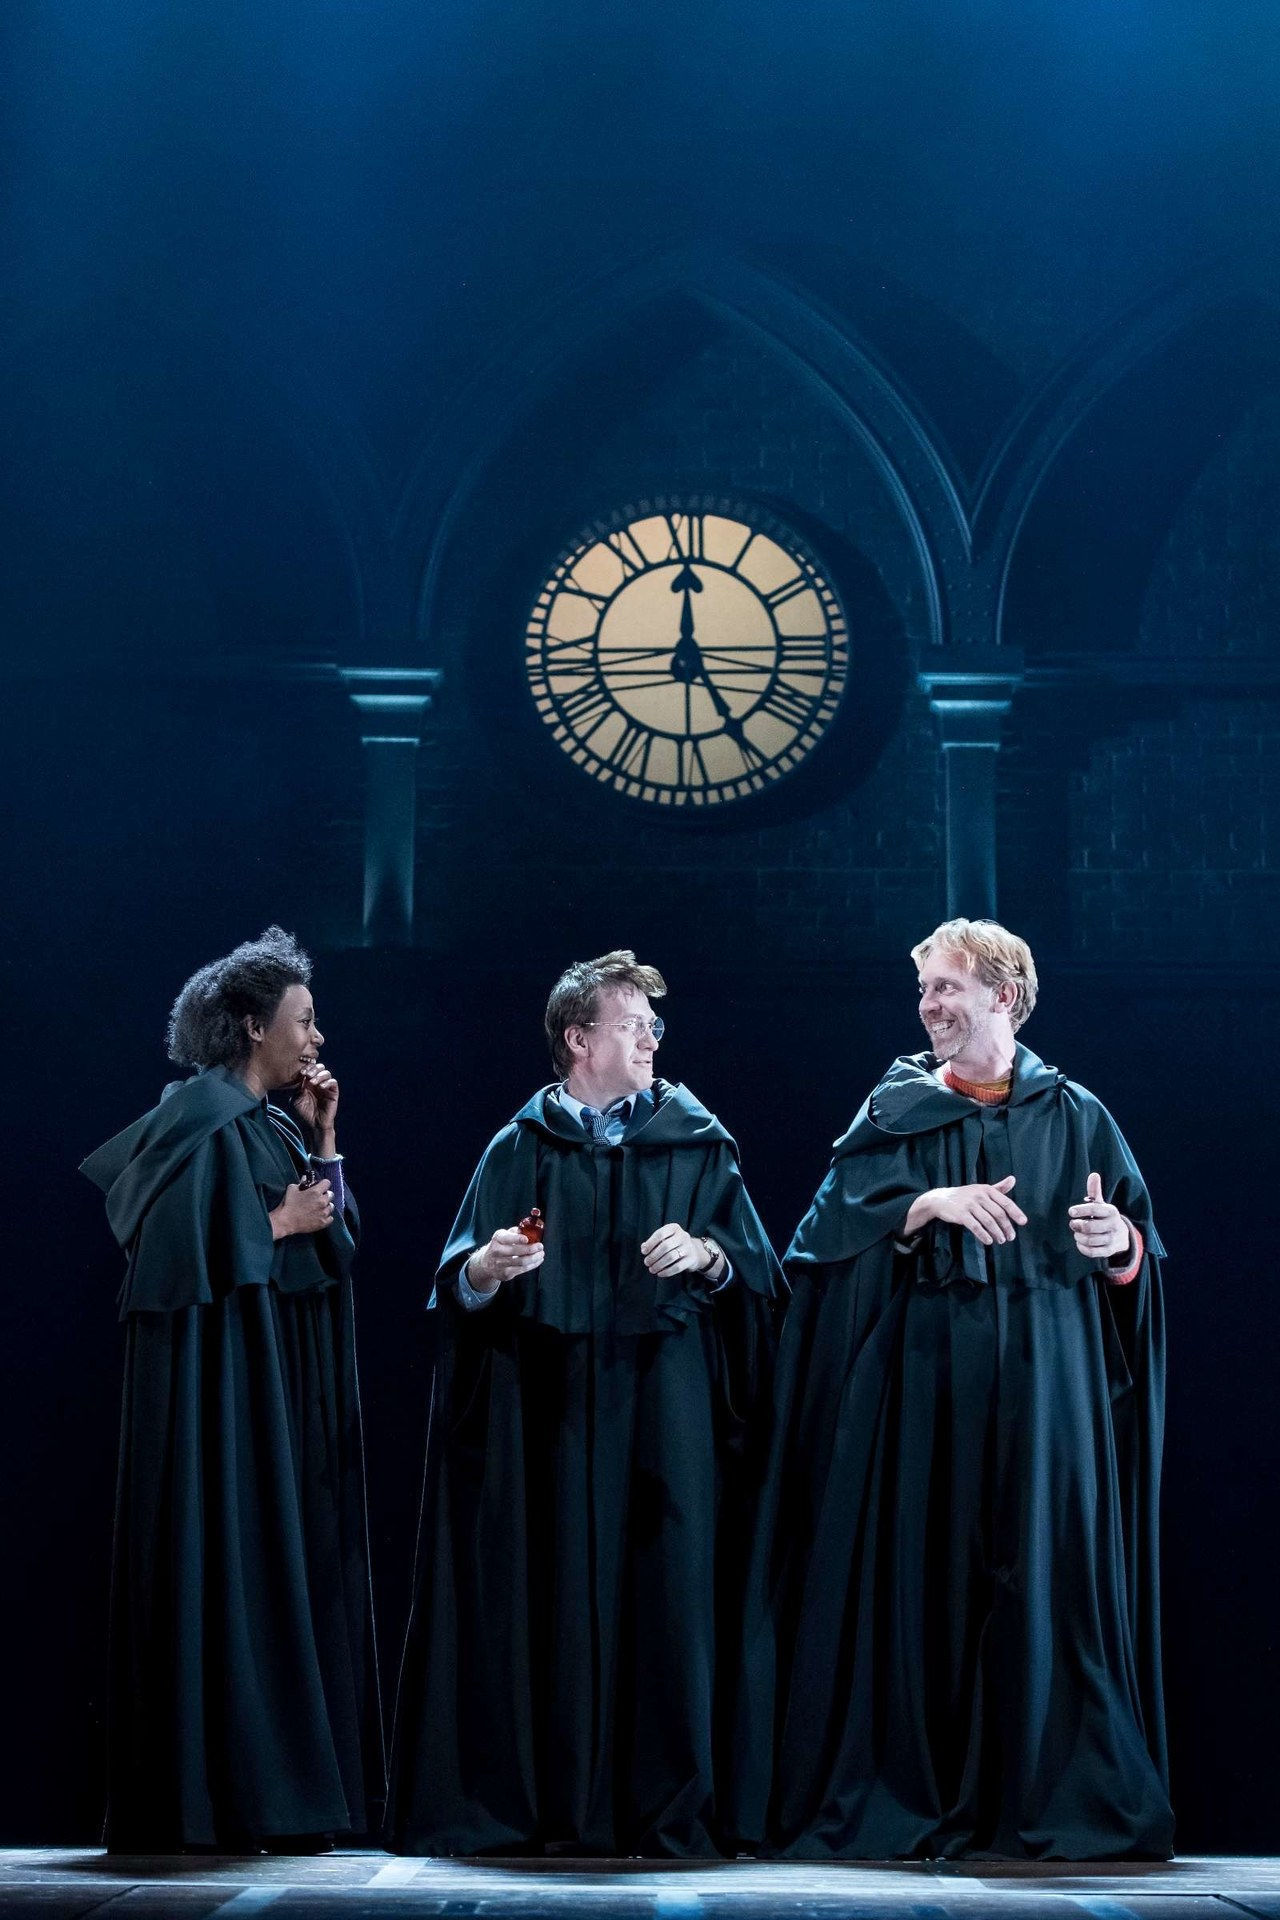 Hermioně Granger (Noma Dumezweni), Harry Potter (Jamie Parker), and Ron Weasley (Paul Thornley).